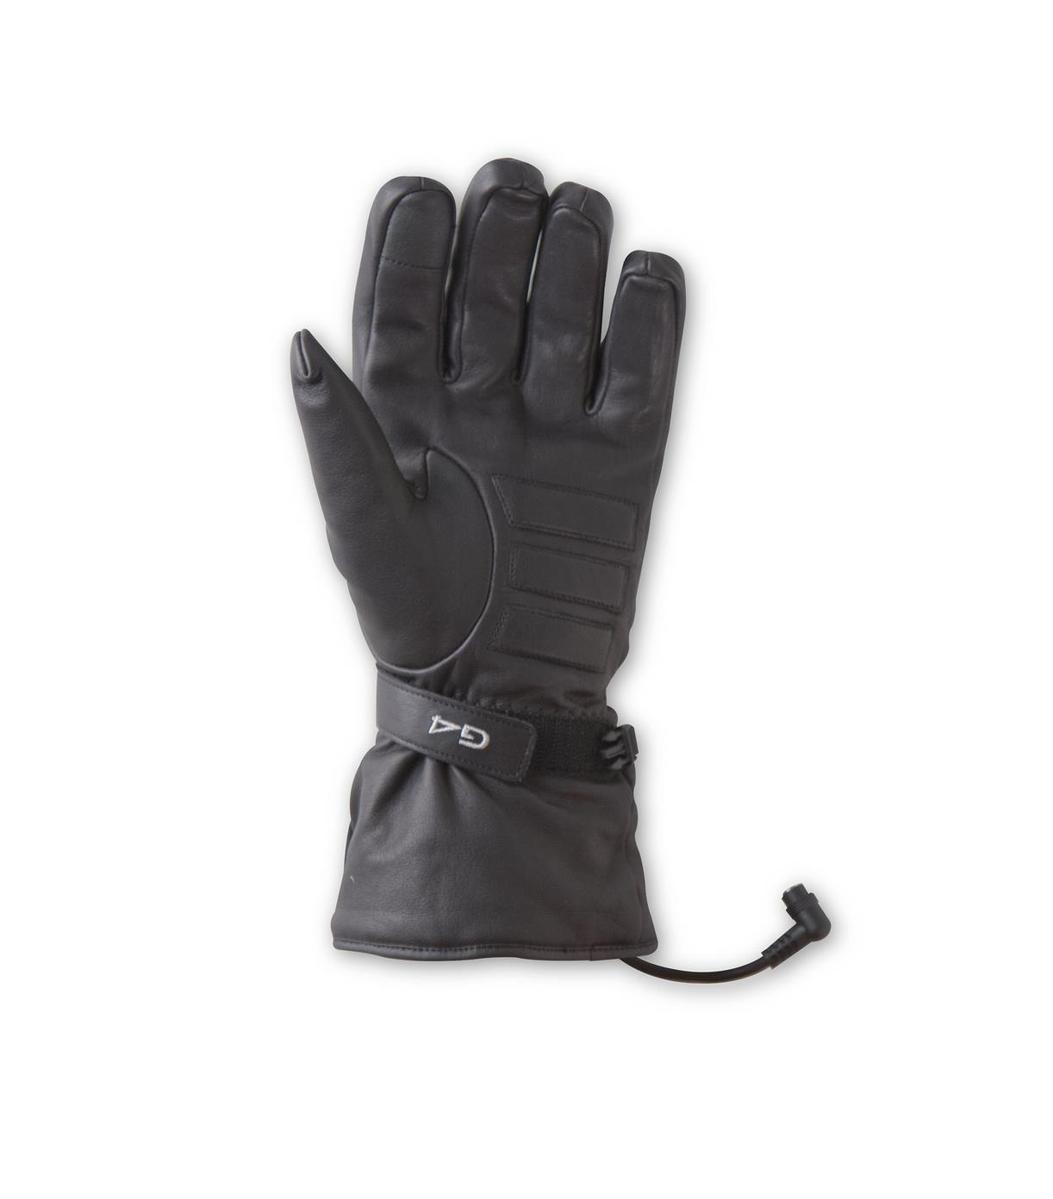 Gerbing G4 Heated Gloves for Women - 12V Motorcycle - Back